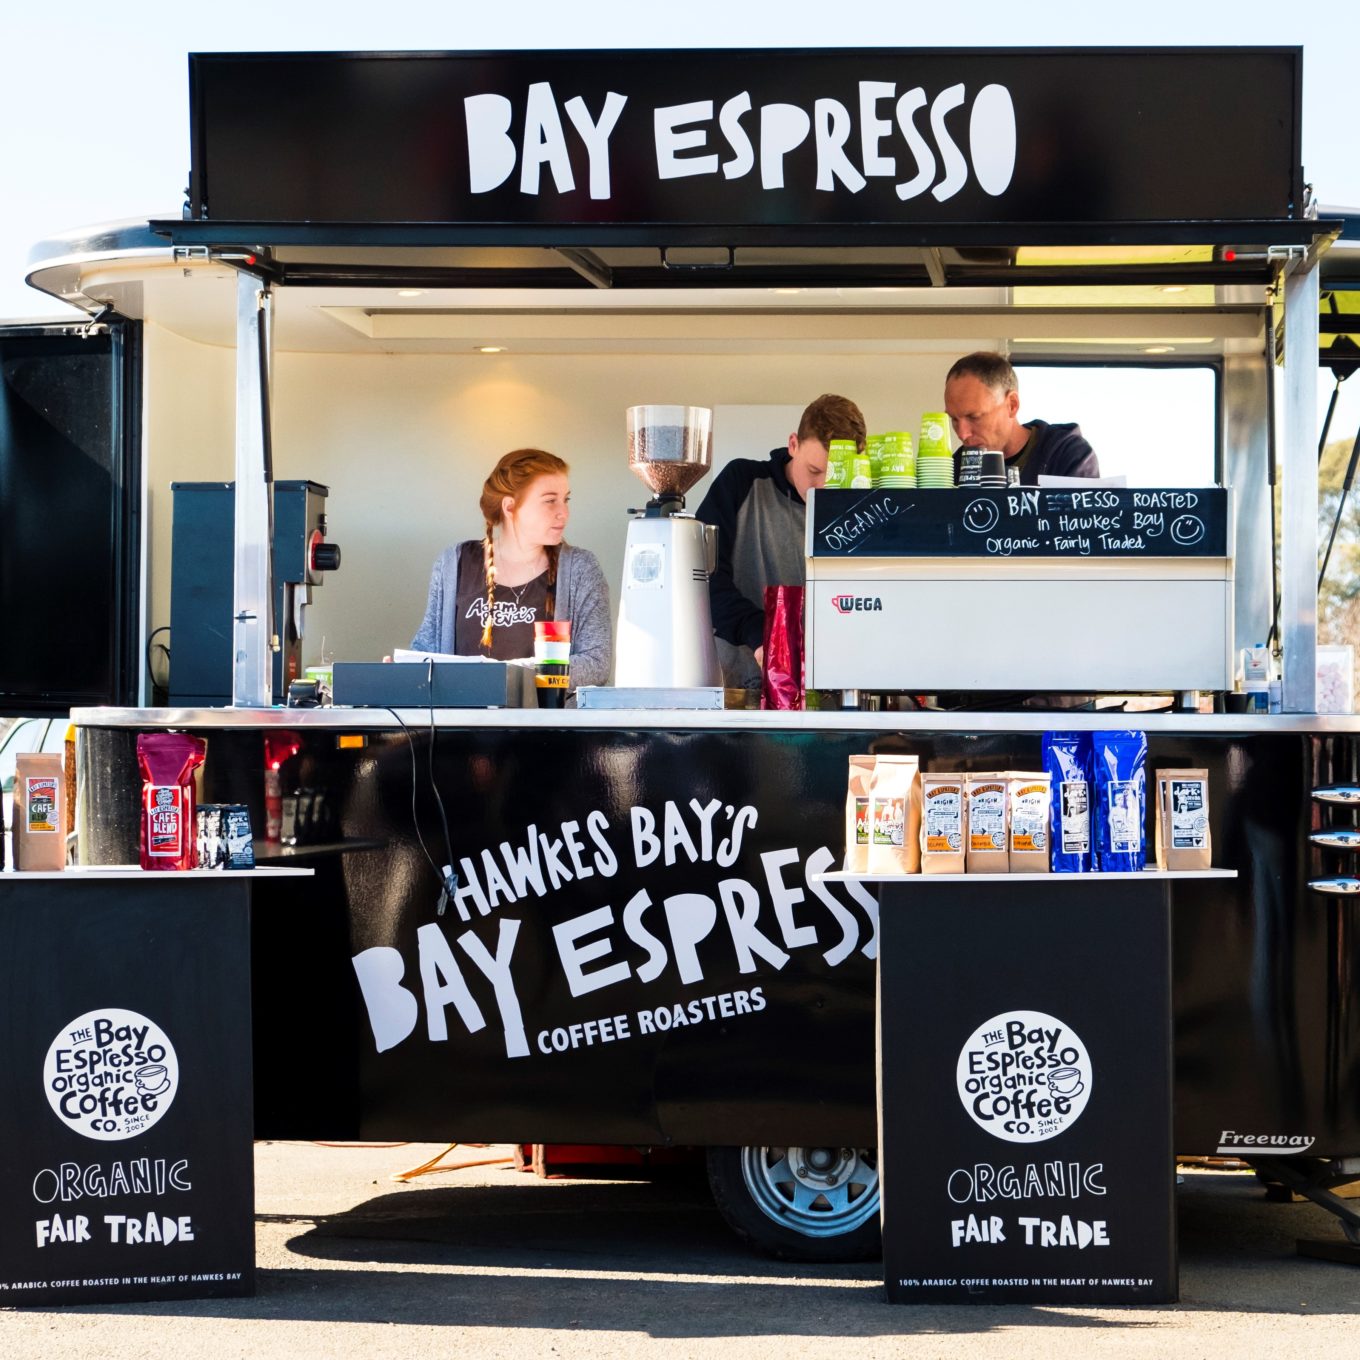 Bay Espresso